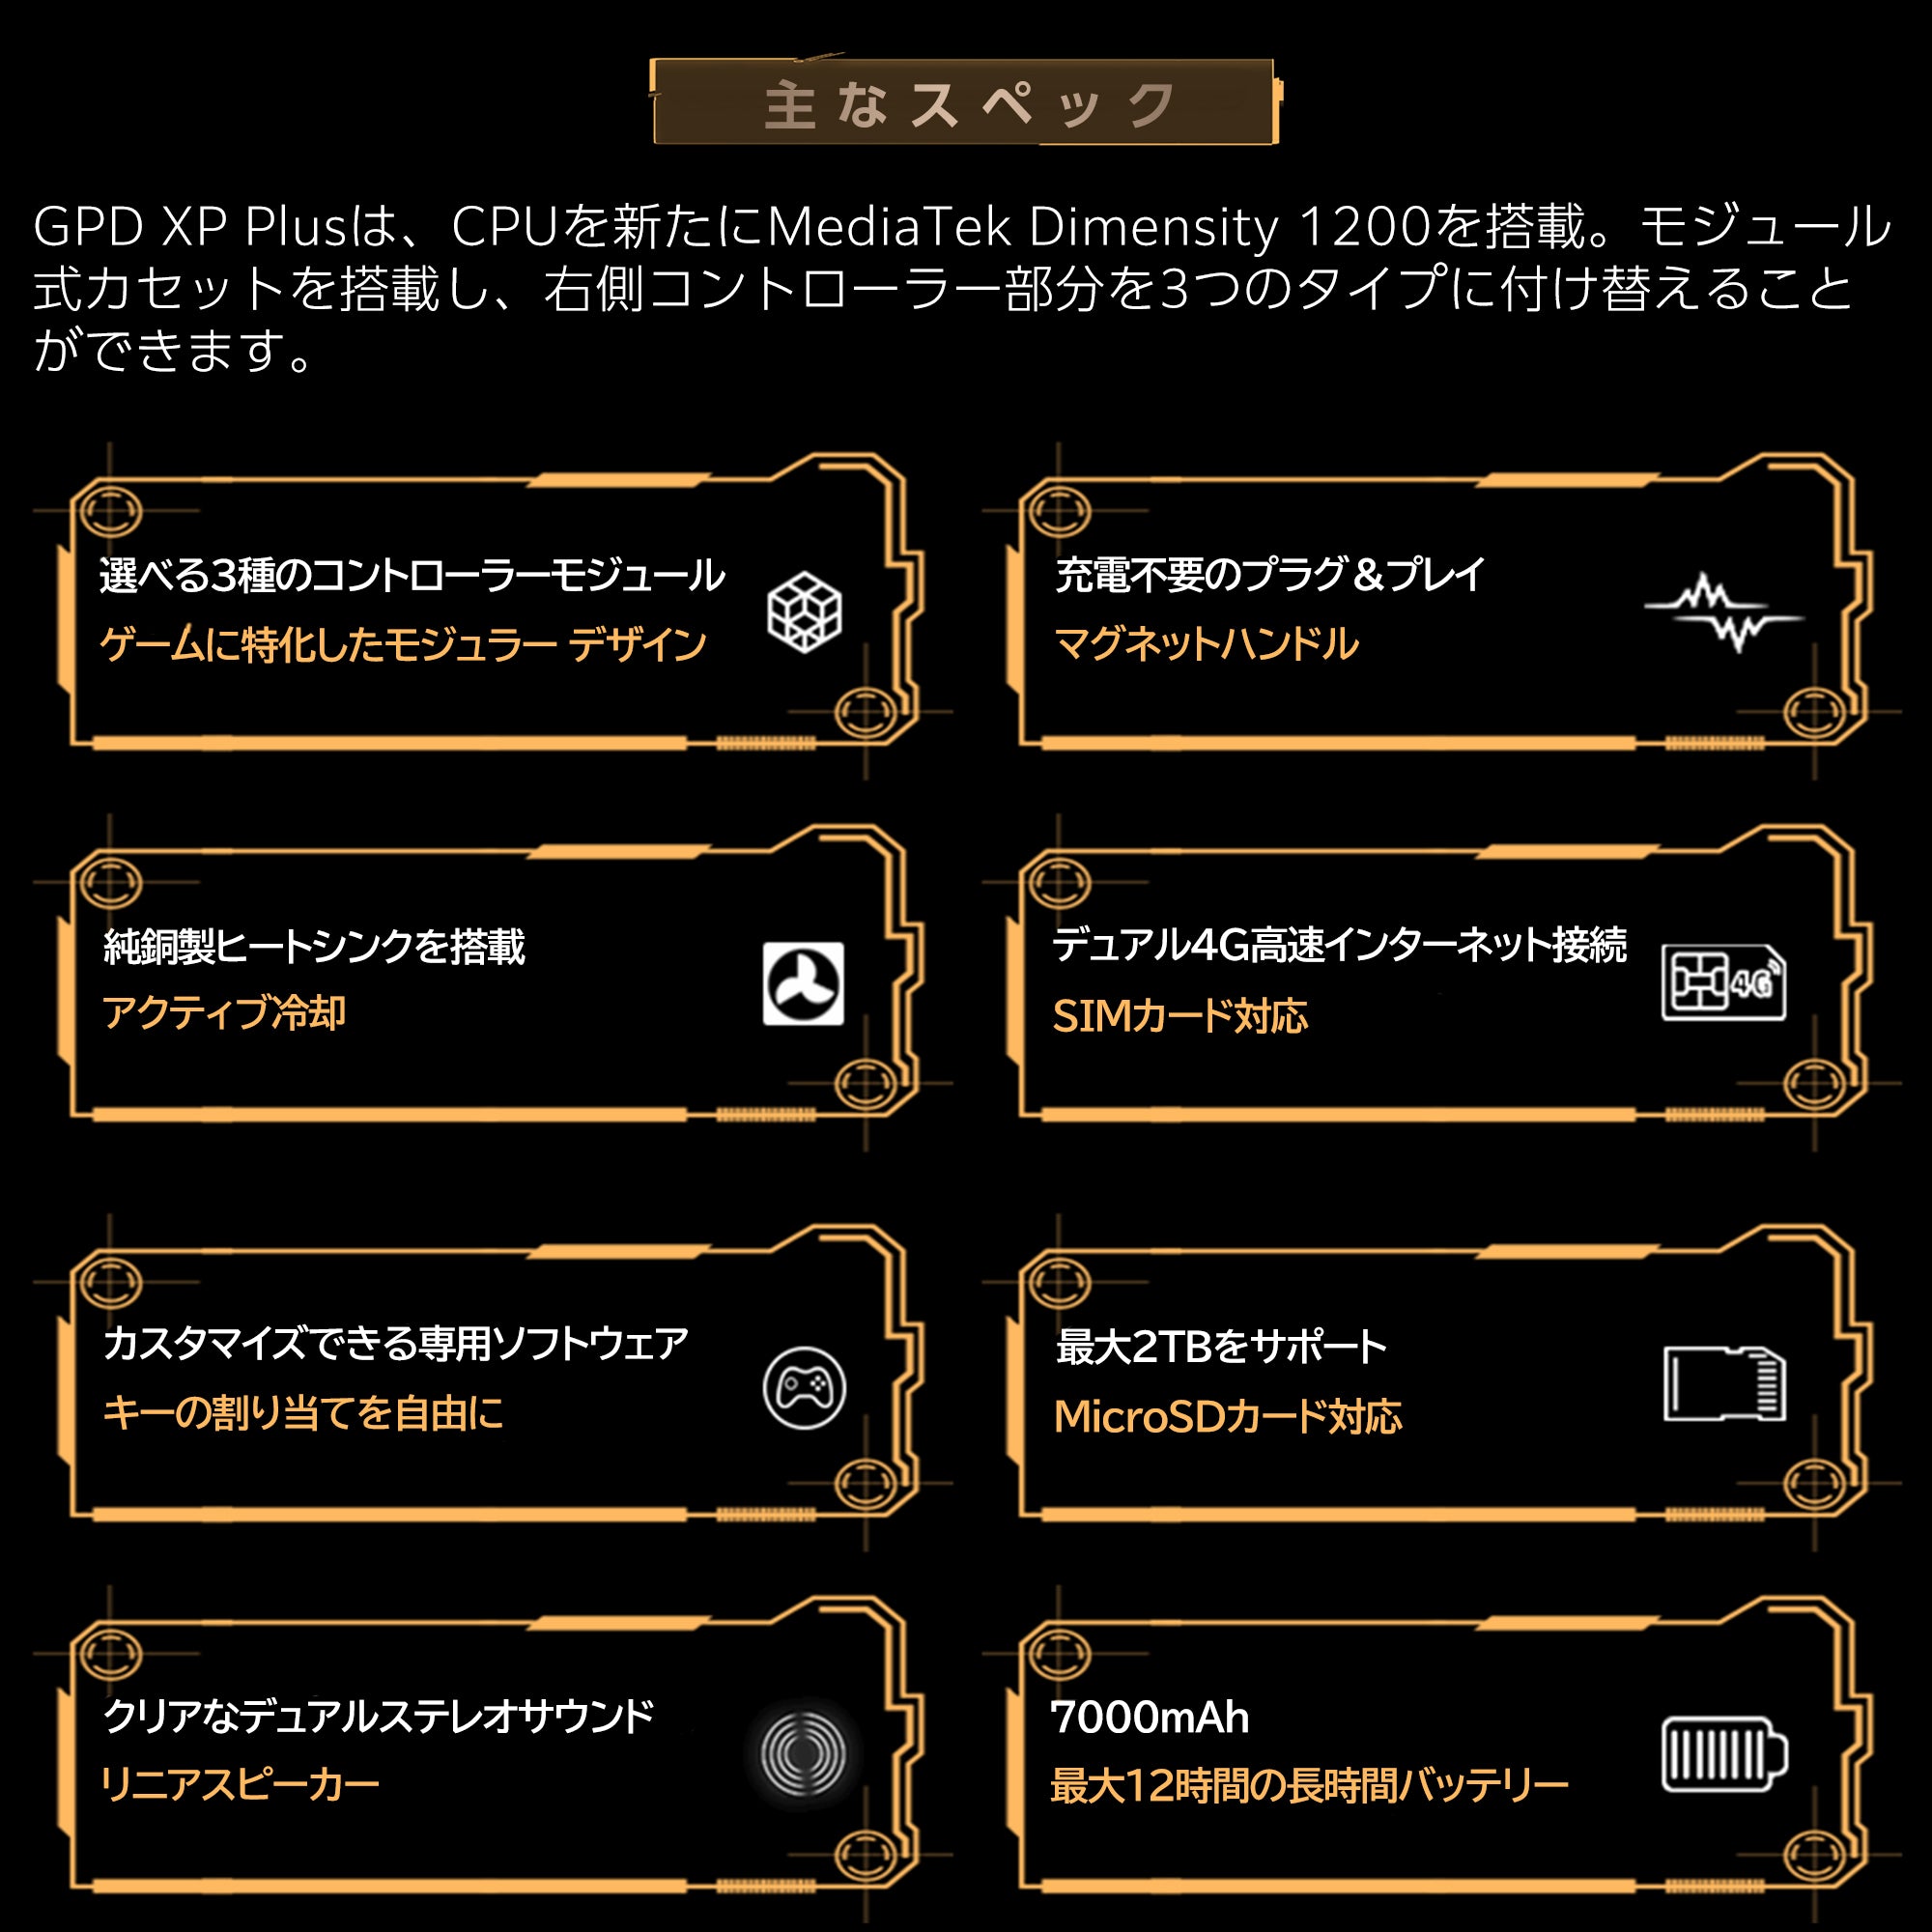 GPD XP Plus Androidゲーム機 国内正規版